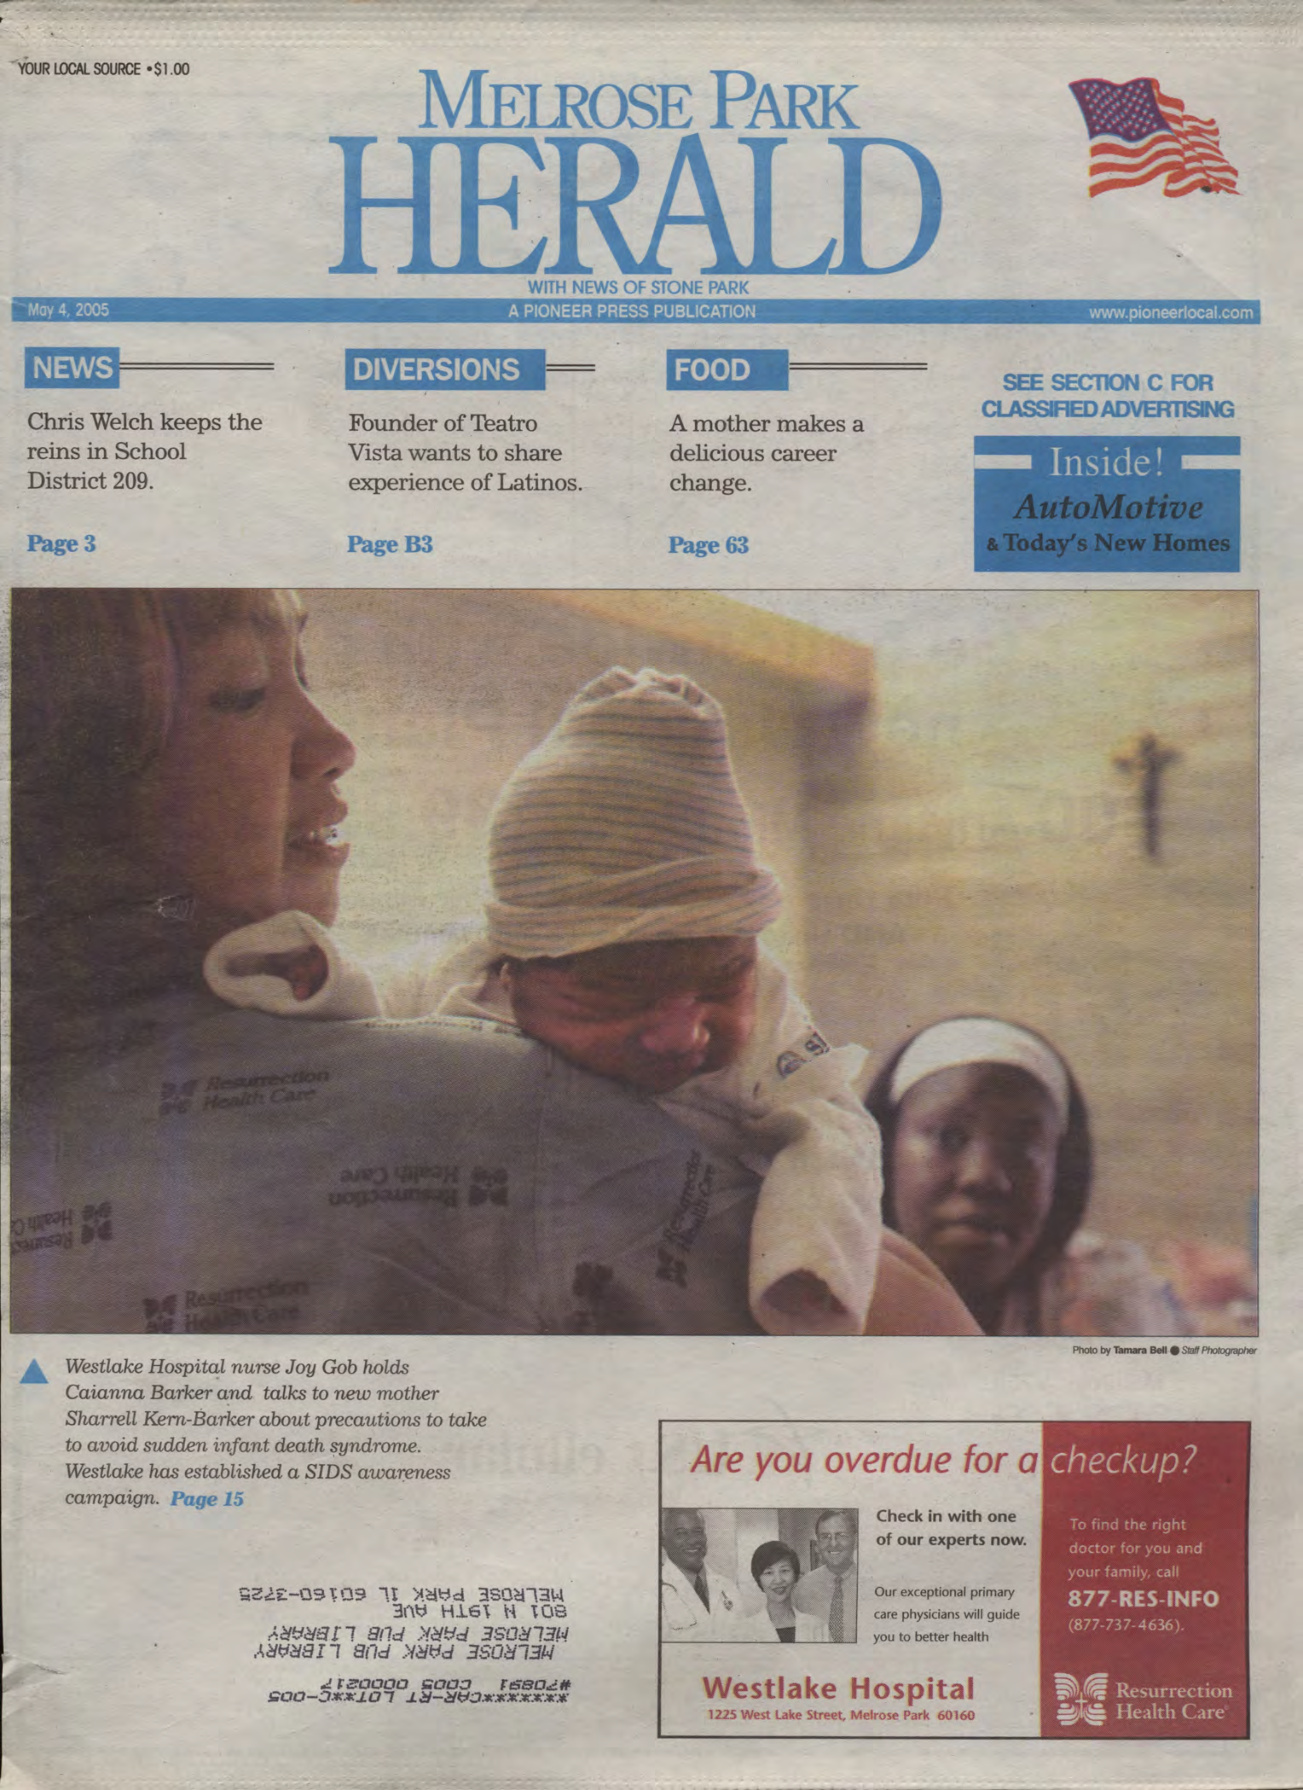 The Herald – 20050504